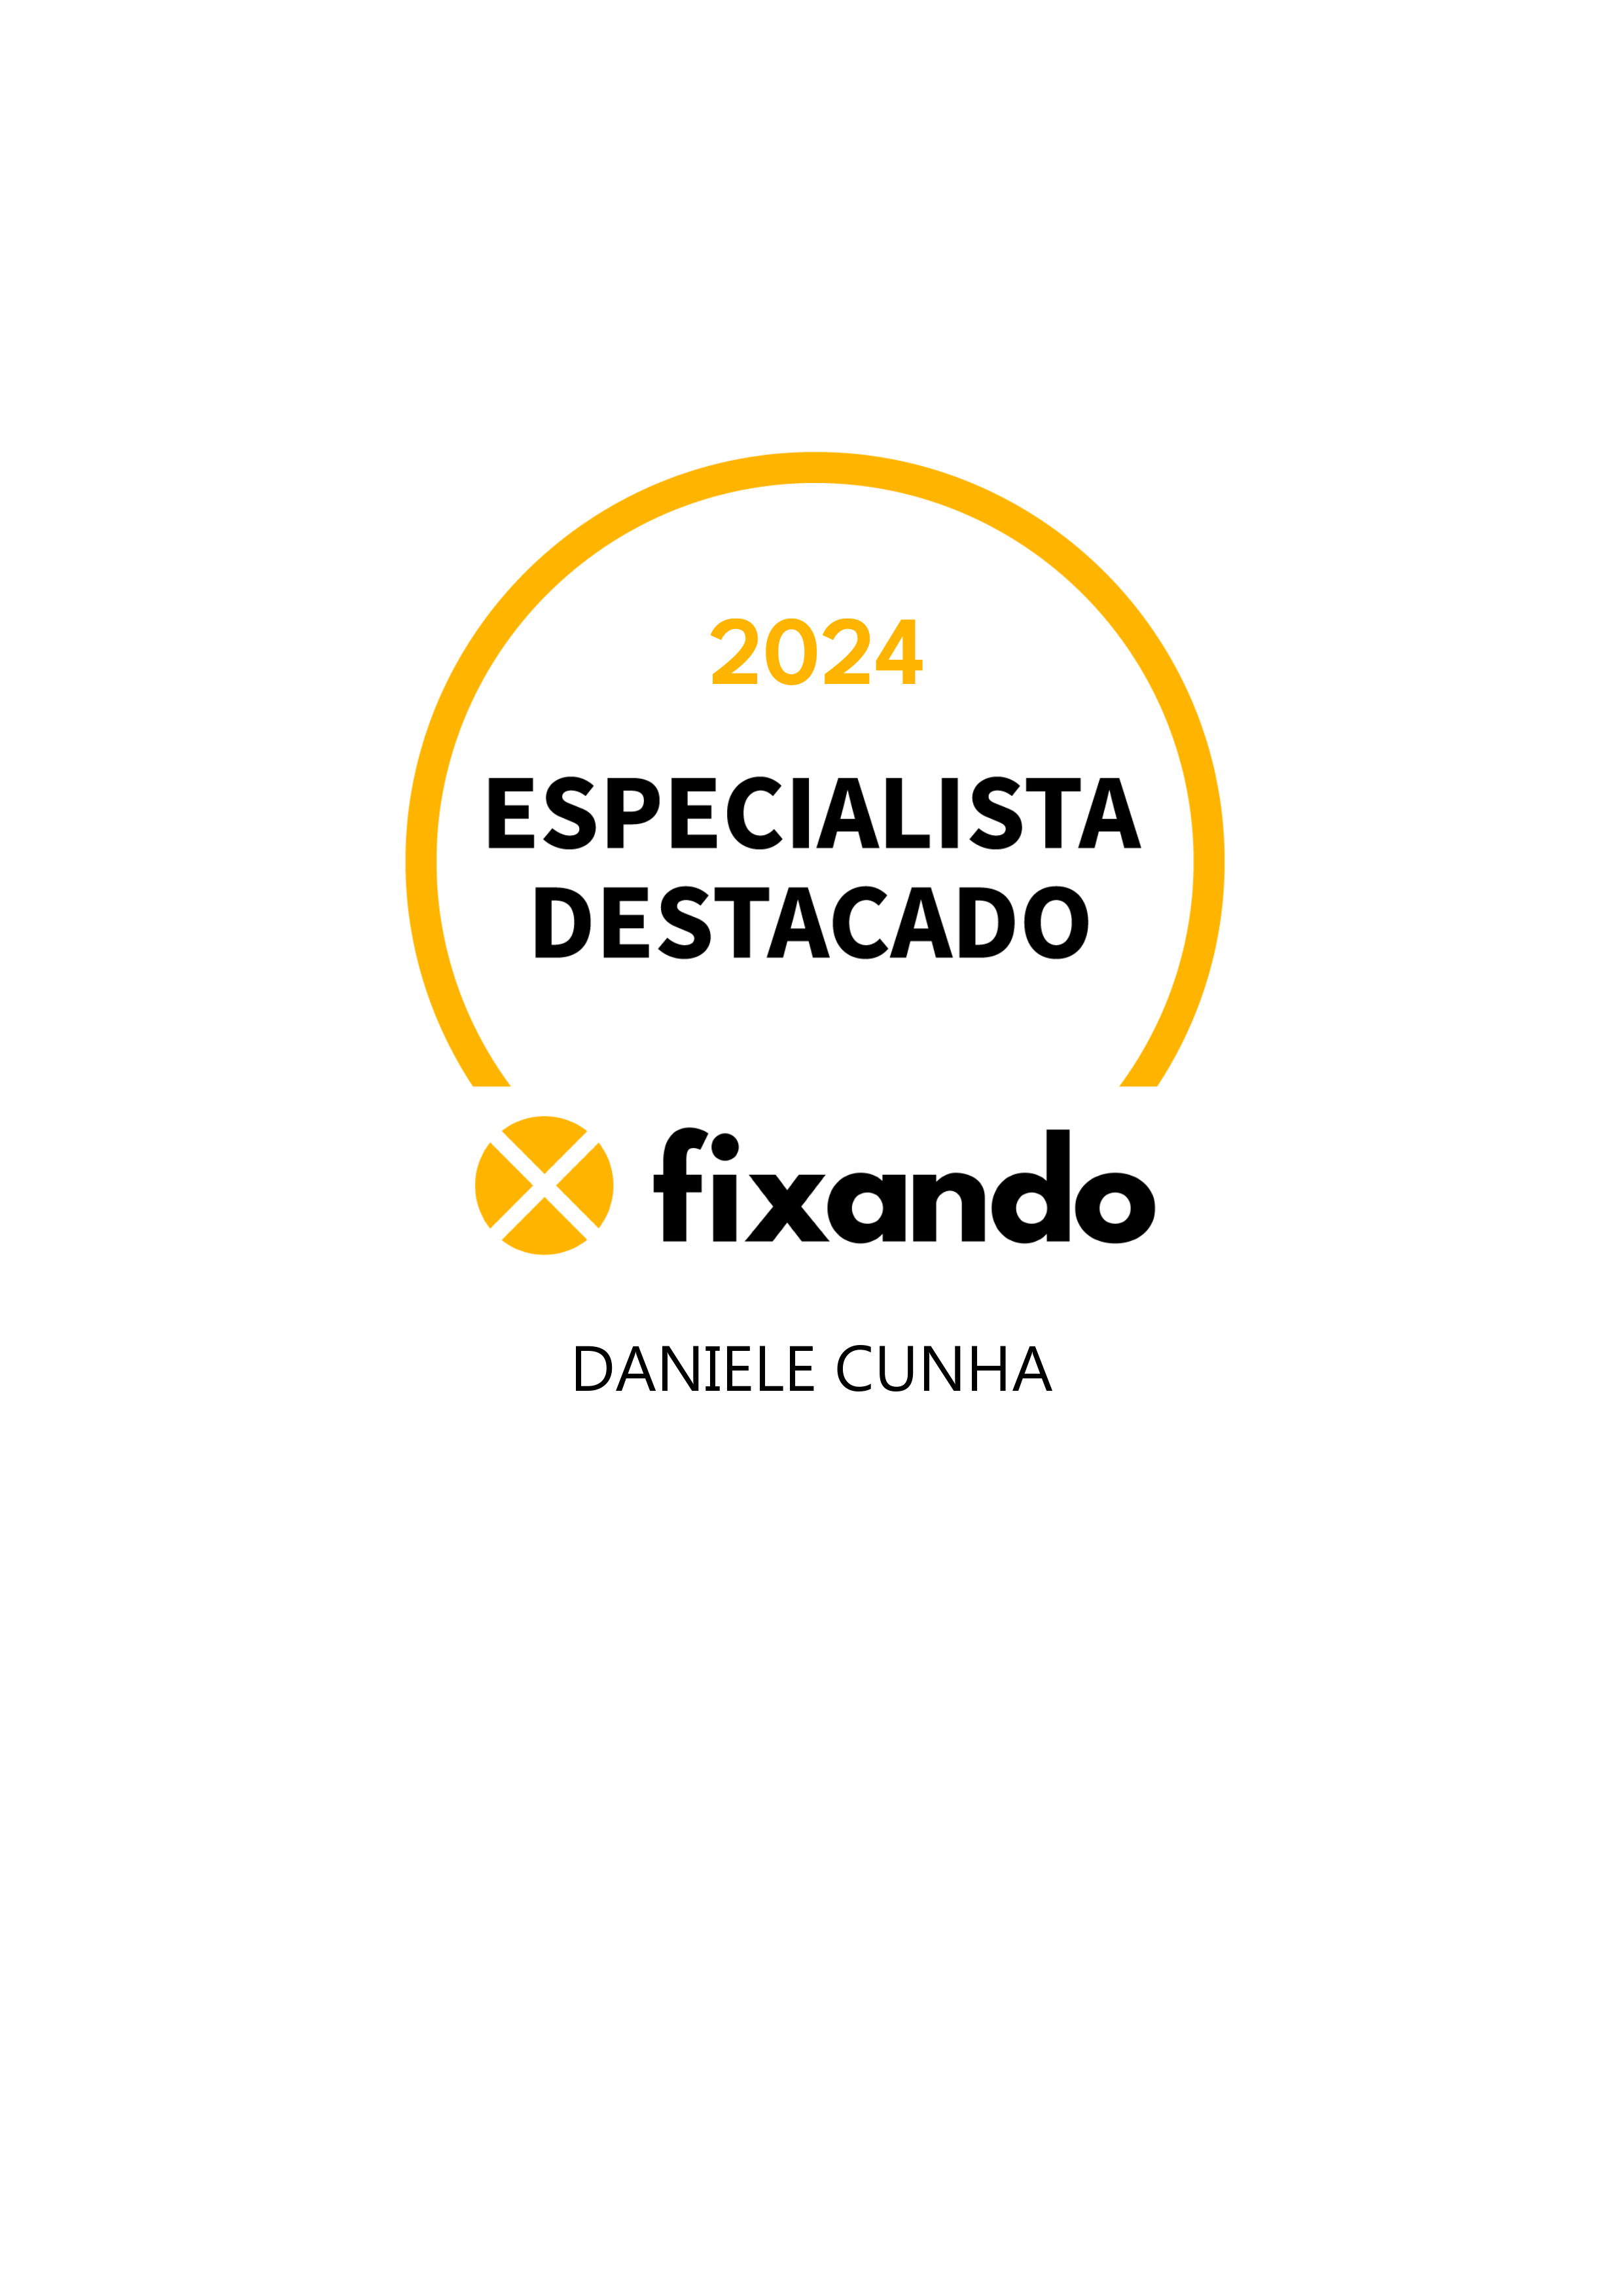 Daniele Cunha - Lisboa - Marketing Digital